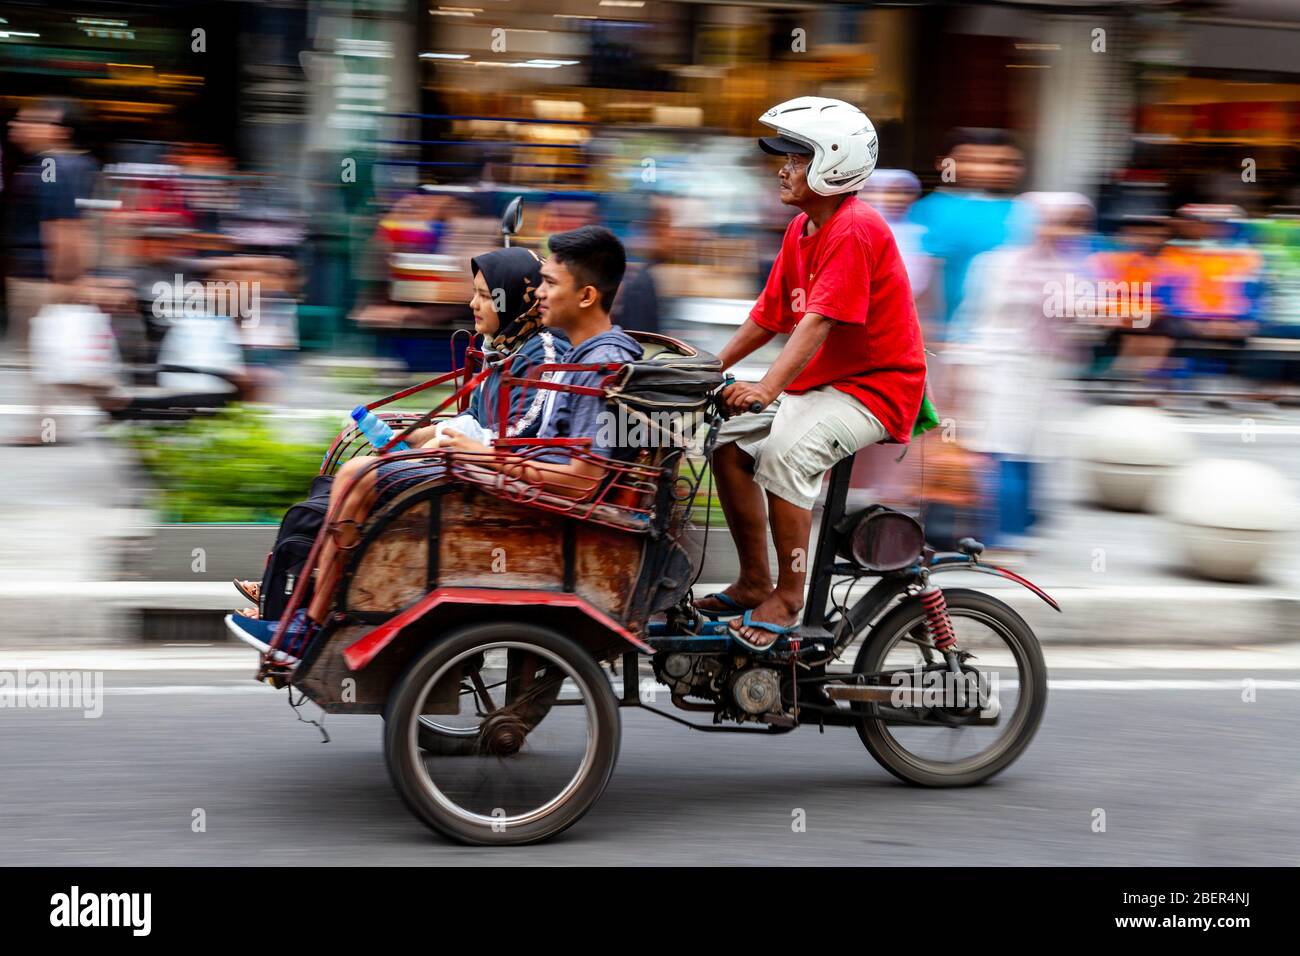 A Motorcycle Taxi and Passengers, Malioboro Street, Yogyakarta, Indonesia. Stock Photo